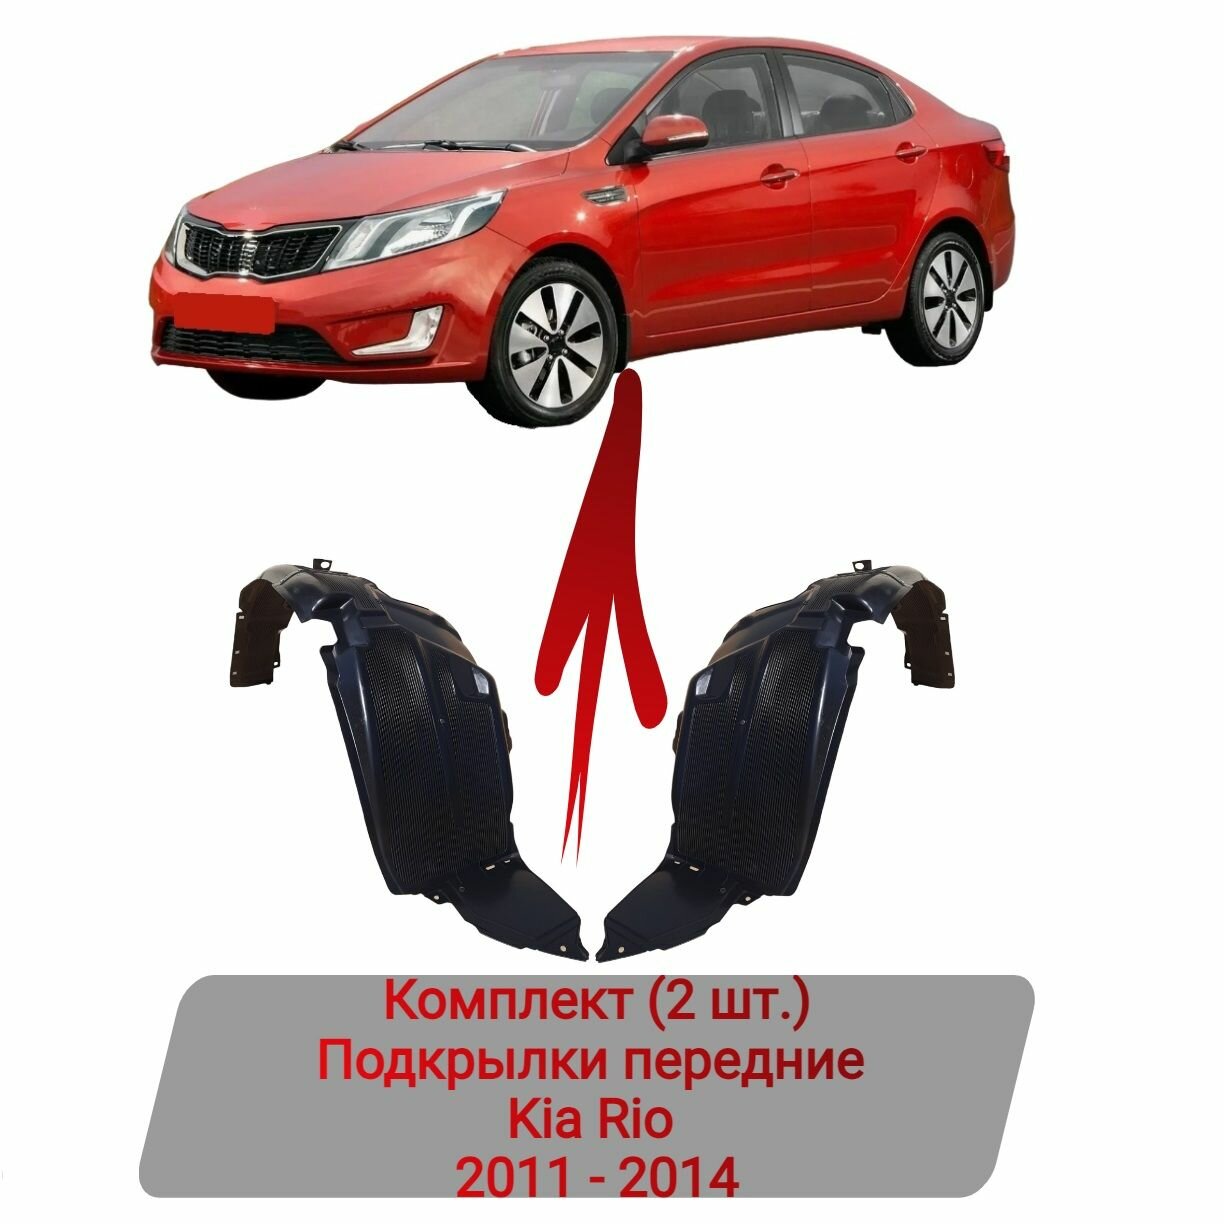 Подкрылки передние Kia Rio 2011-2014 Комплект